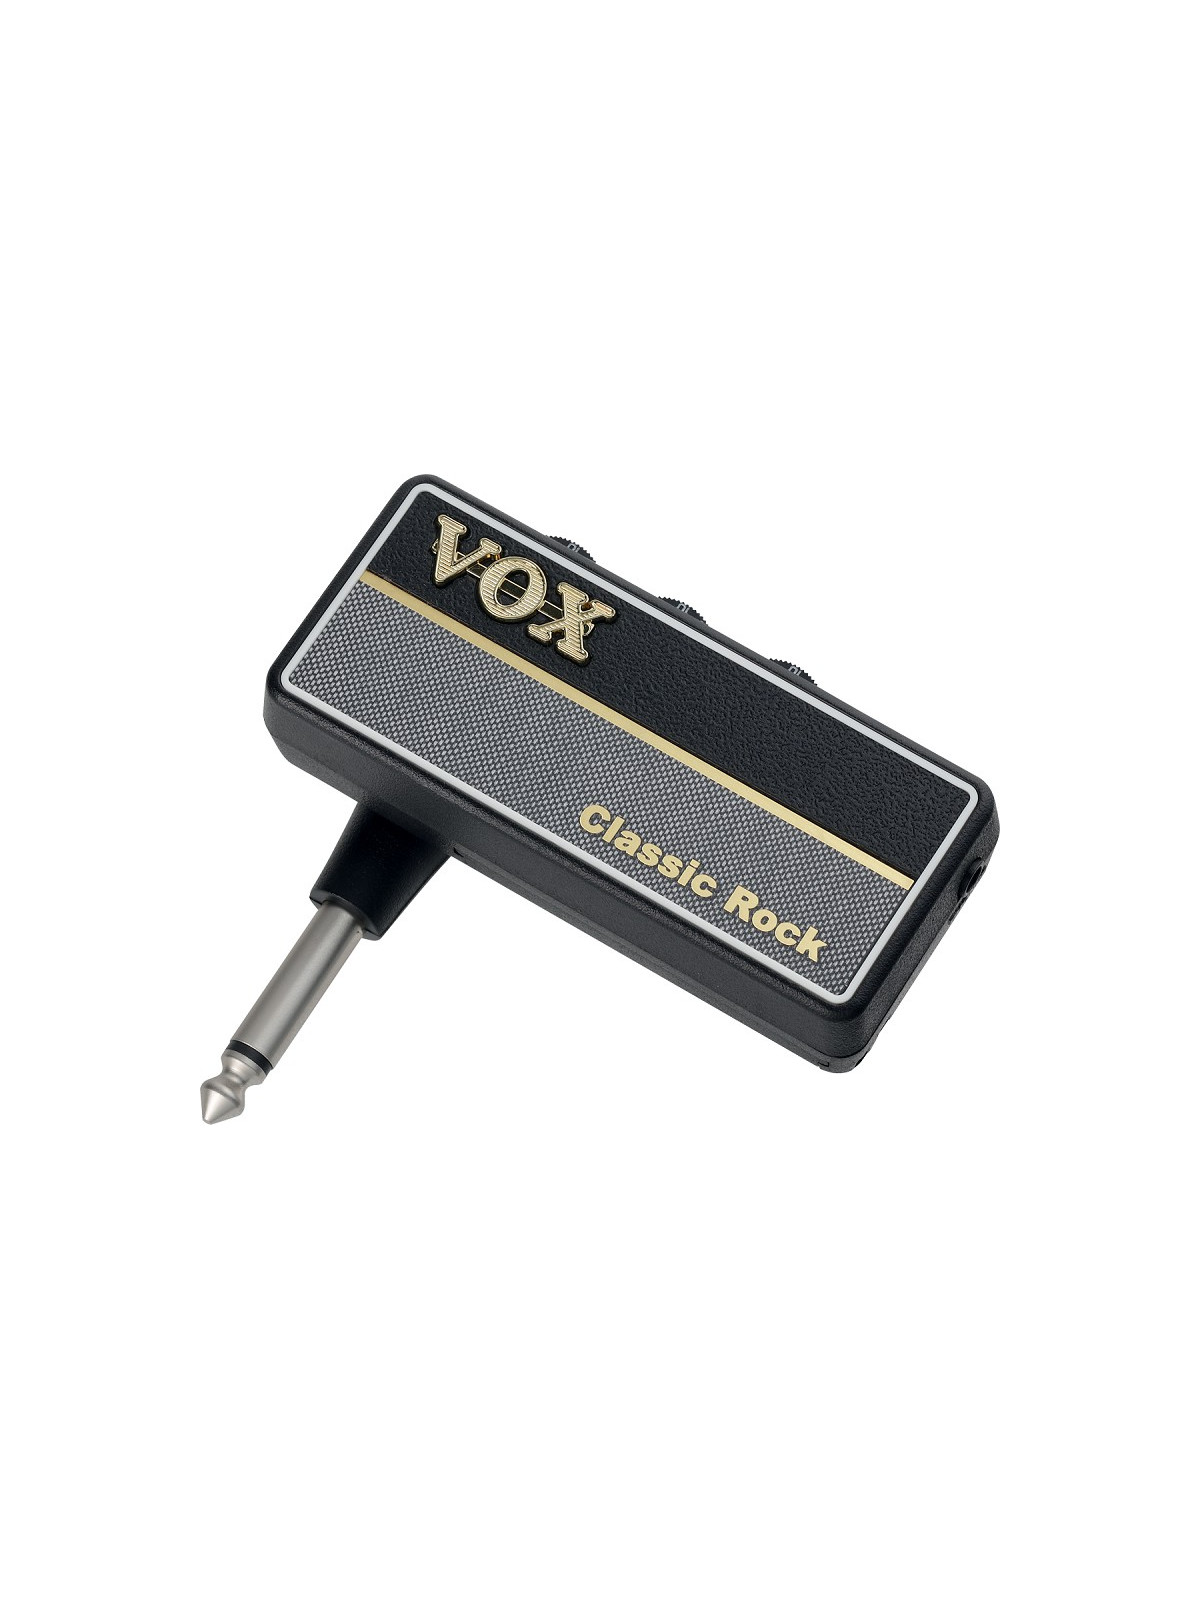 Vox AP2-CR amplug Classic Rock